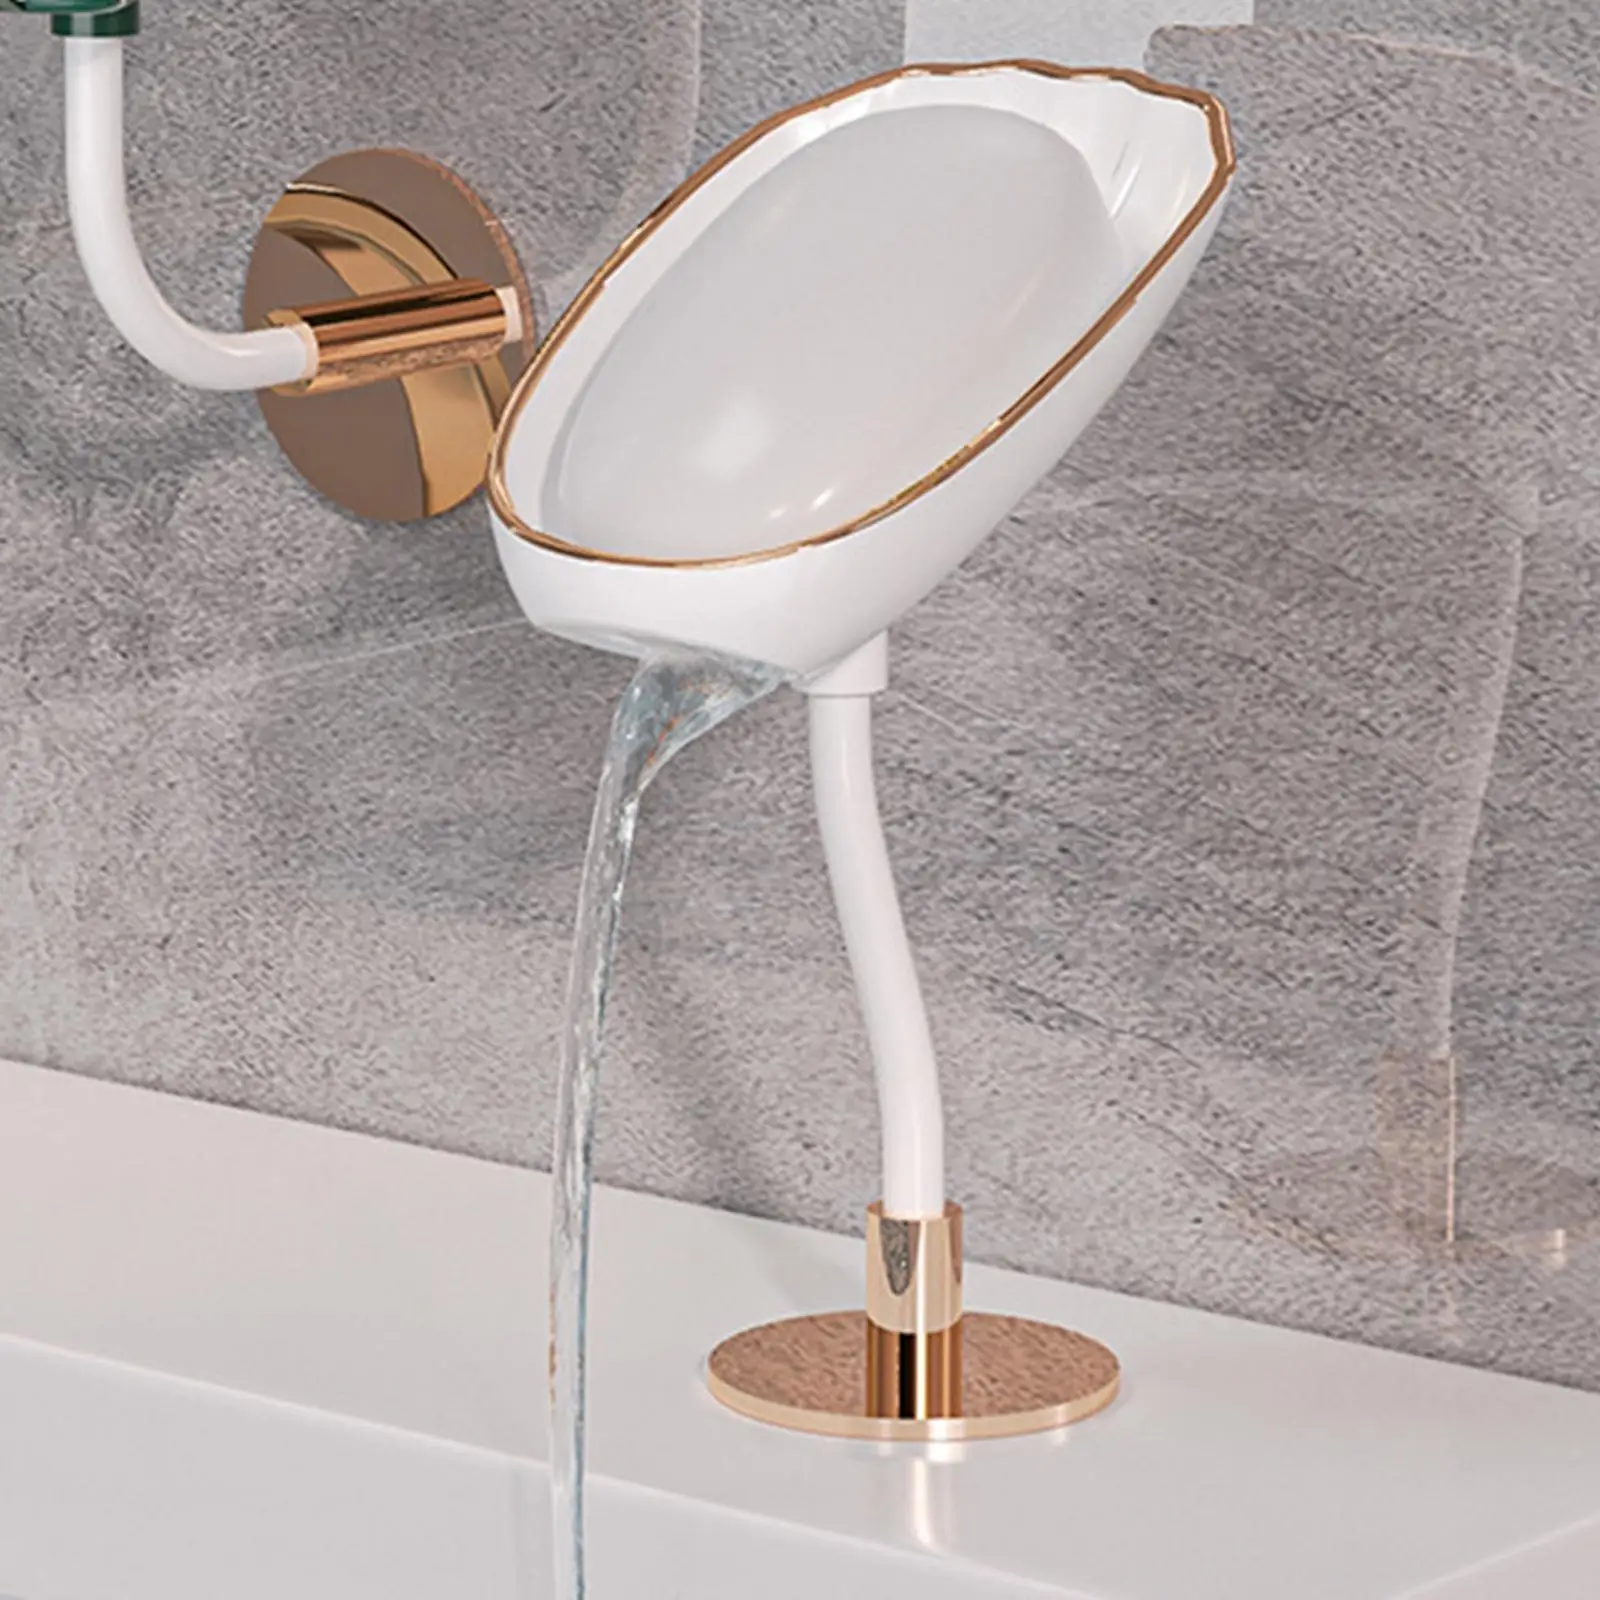 Adjustable Bathroom Soap Dish Self Draining Countertop or Wall Mounting Walls Storage Rack for Shower Bathtub Kitchen Decoration